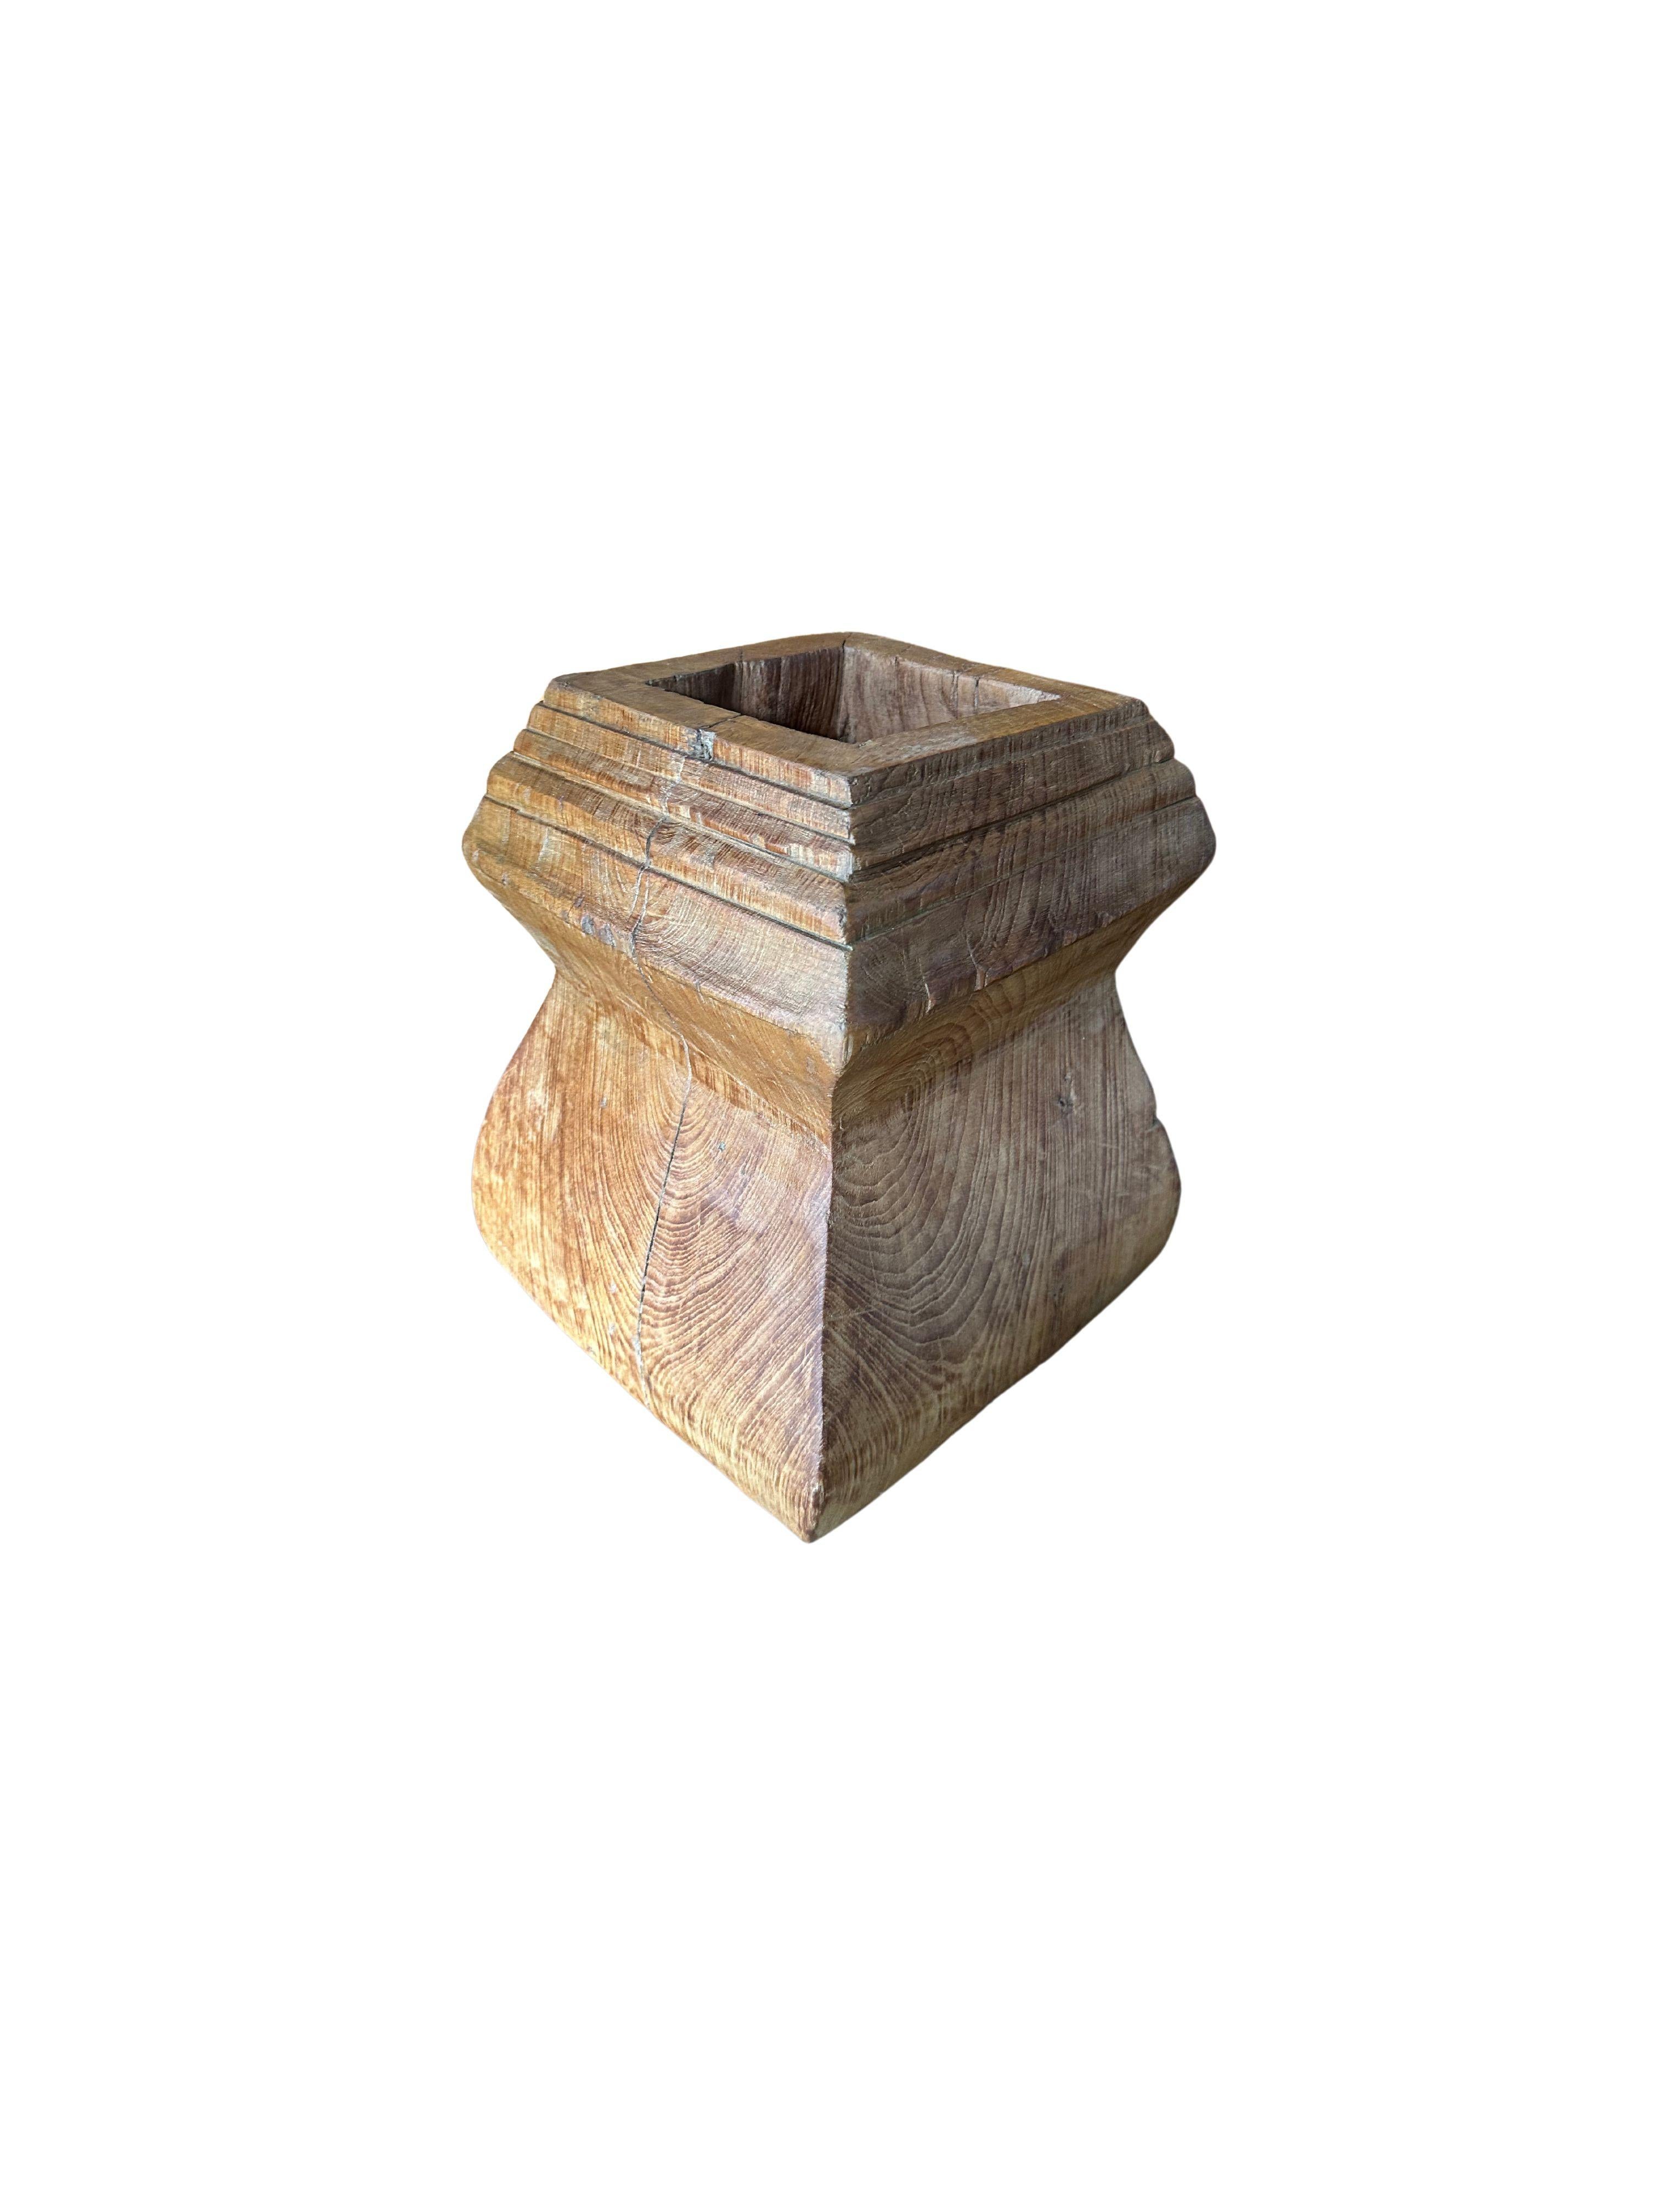 wooden column base